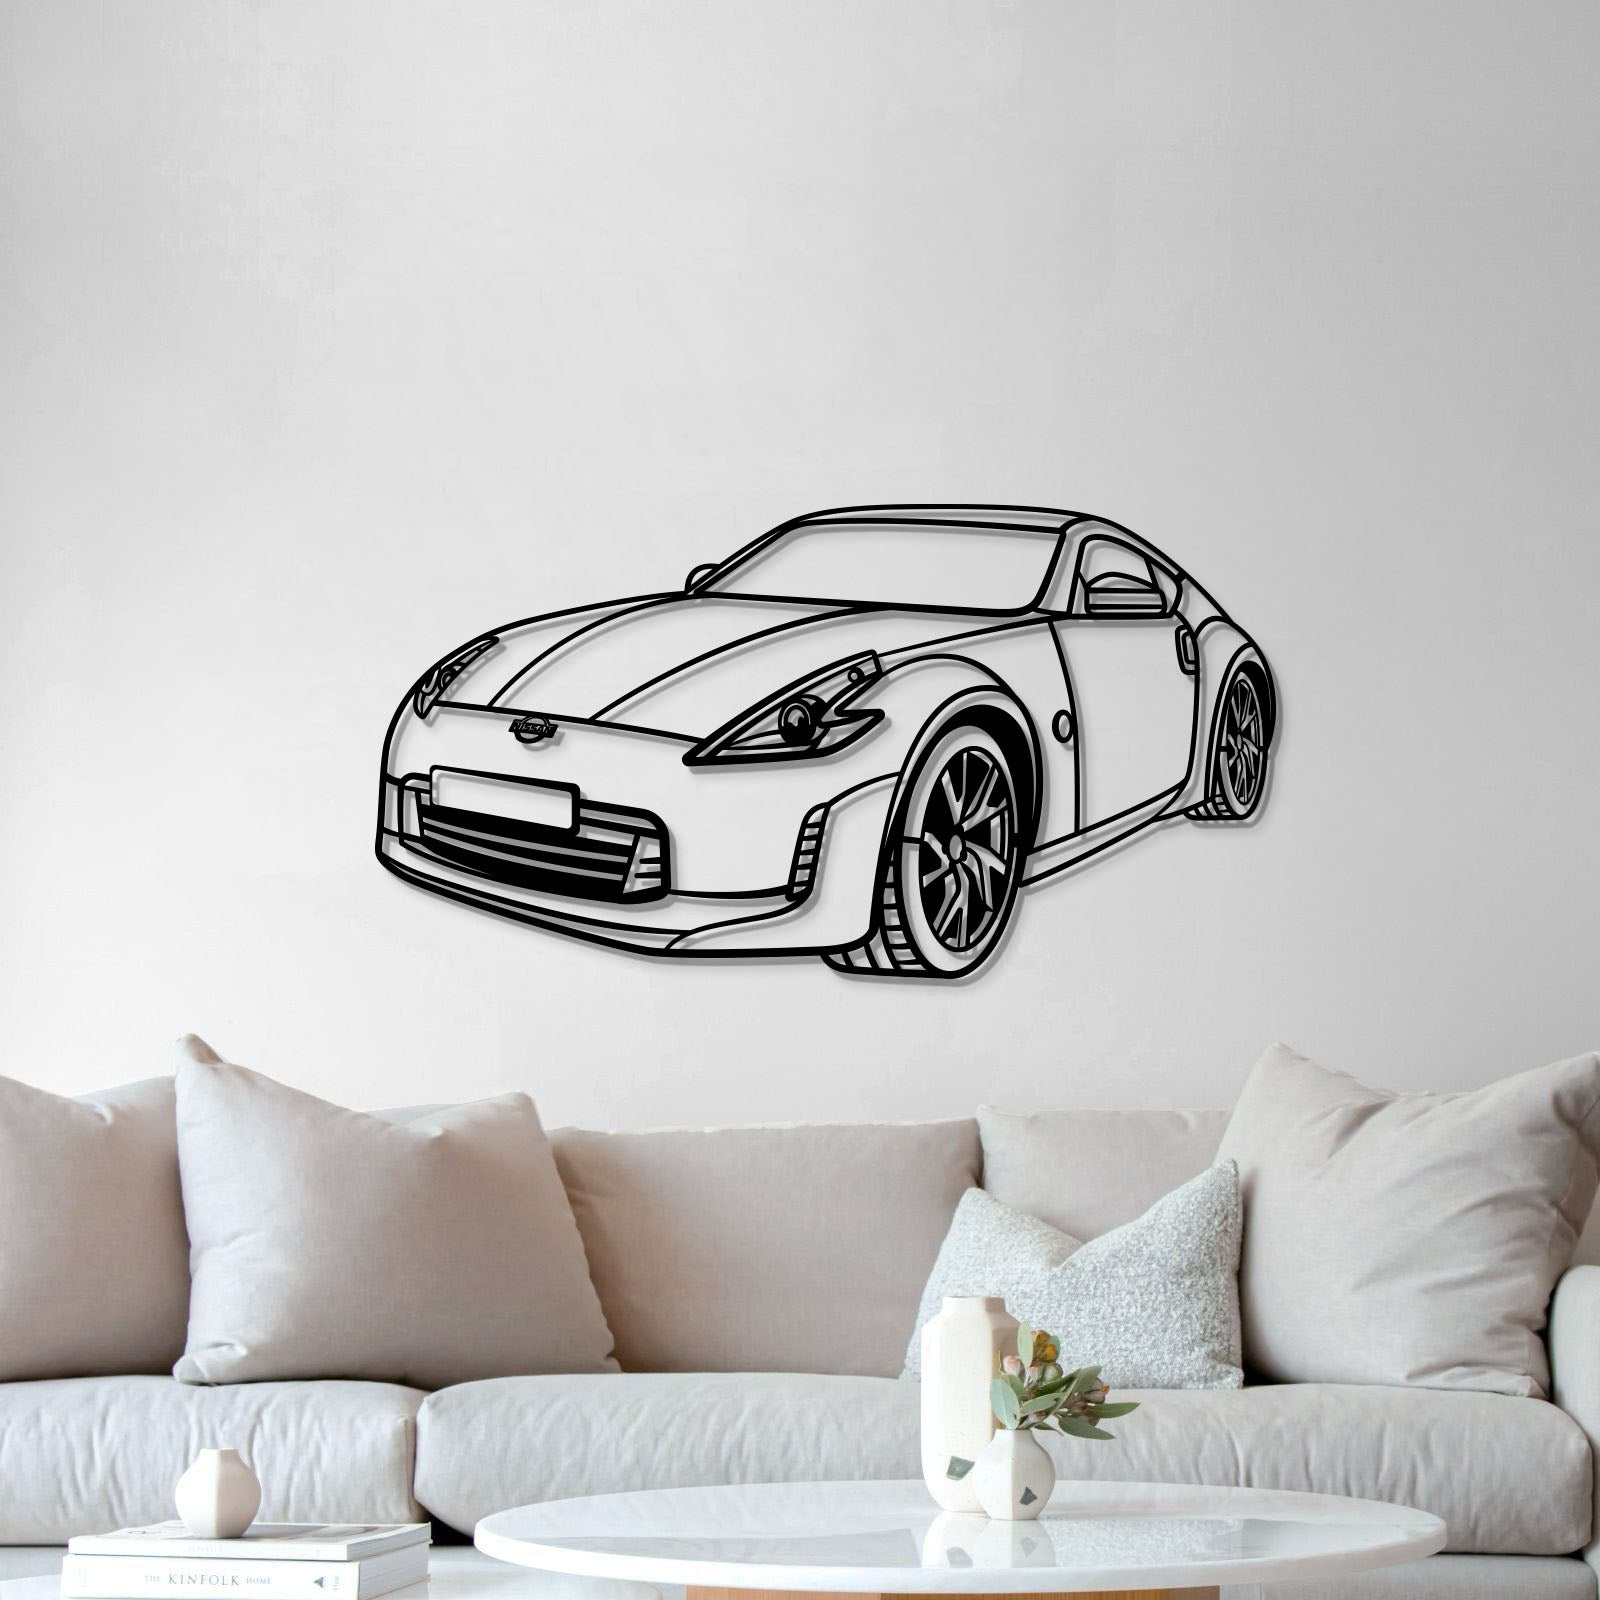 2015 370z Perspective Metal Car Wall Art - MT1181